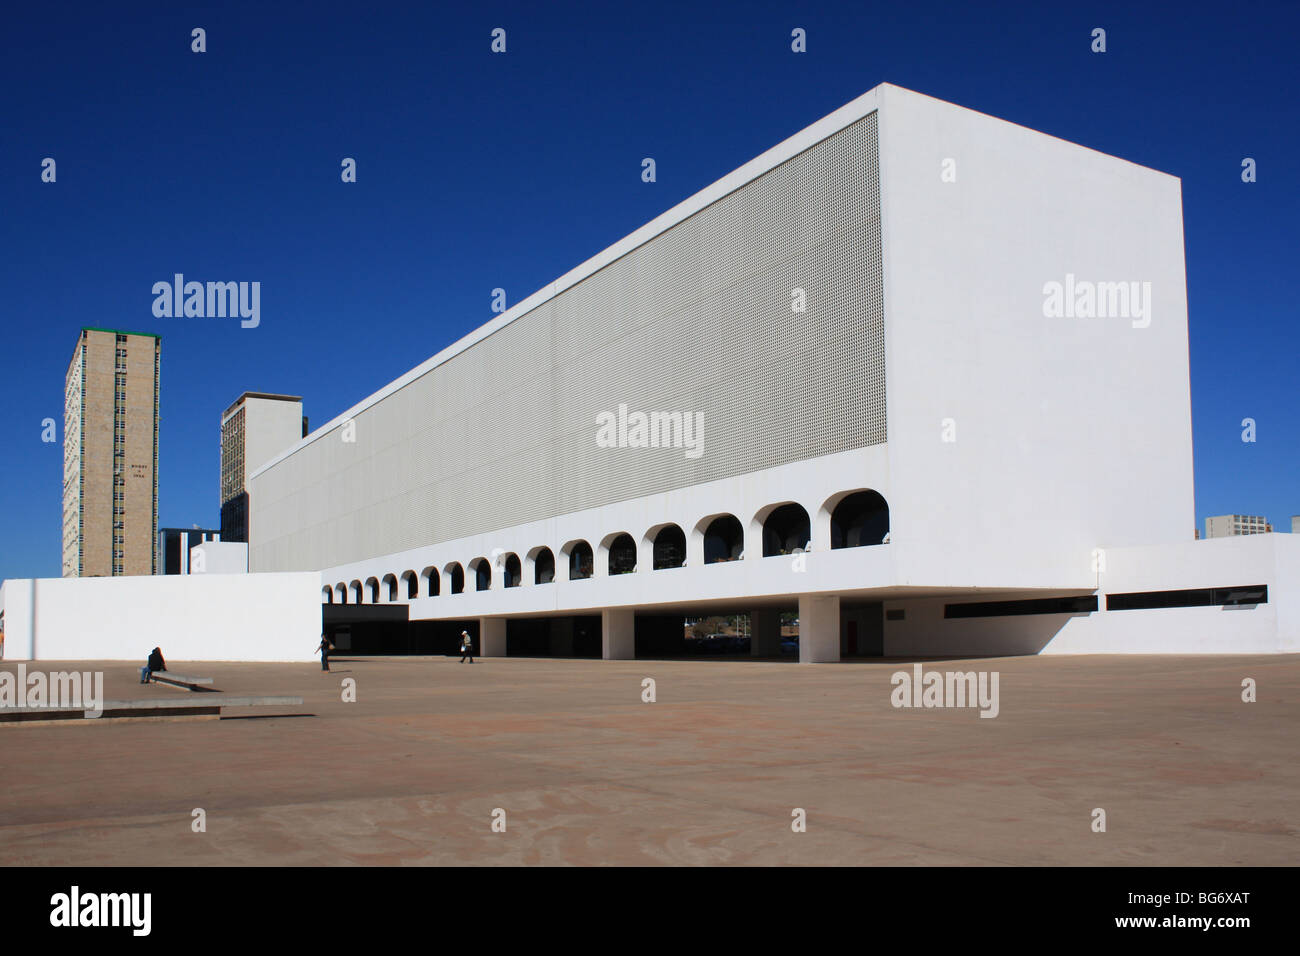 National library oscar niemeyer brasilia architect Stock Photo